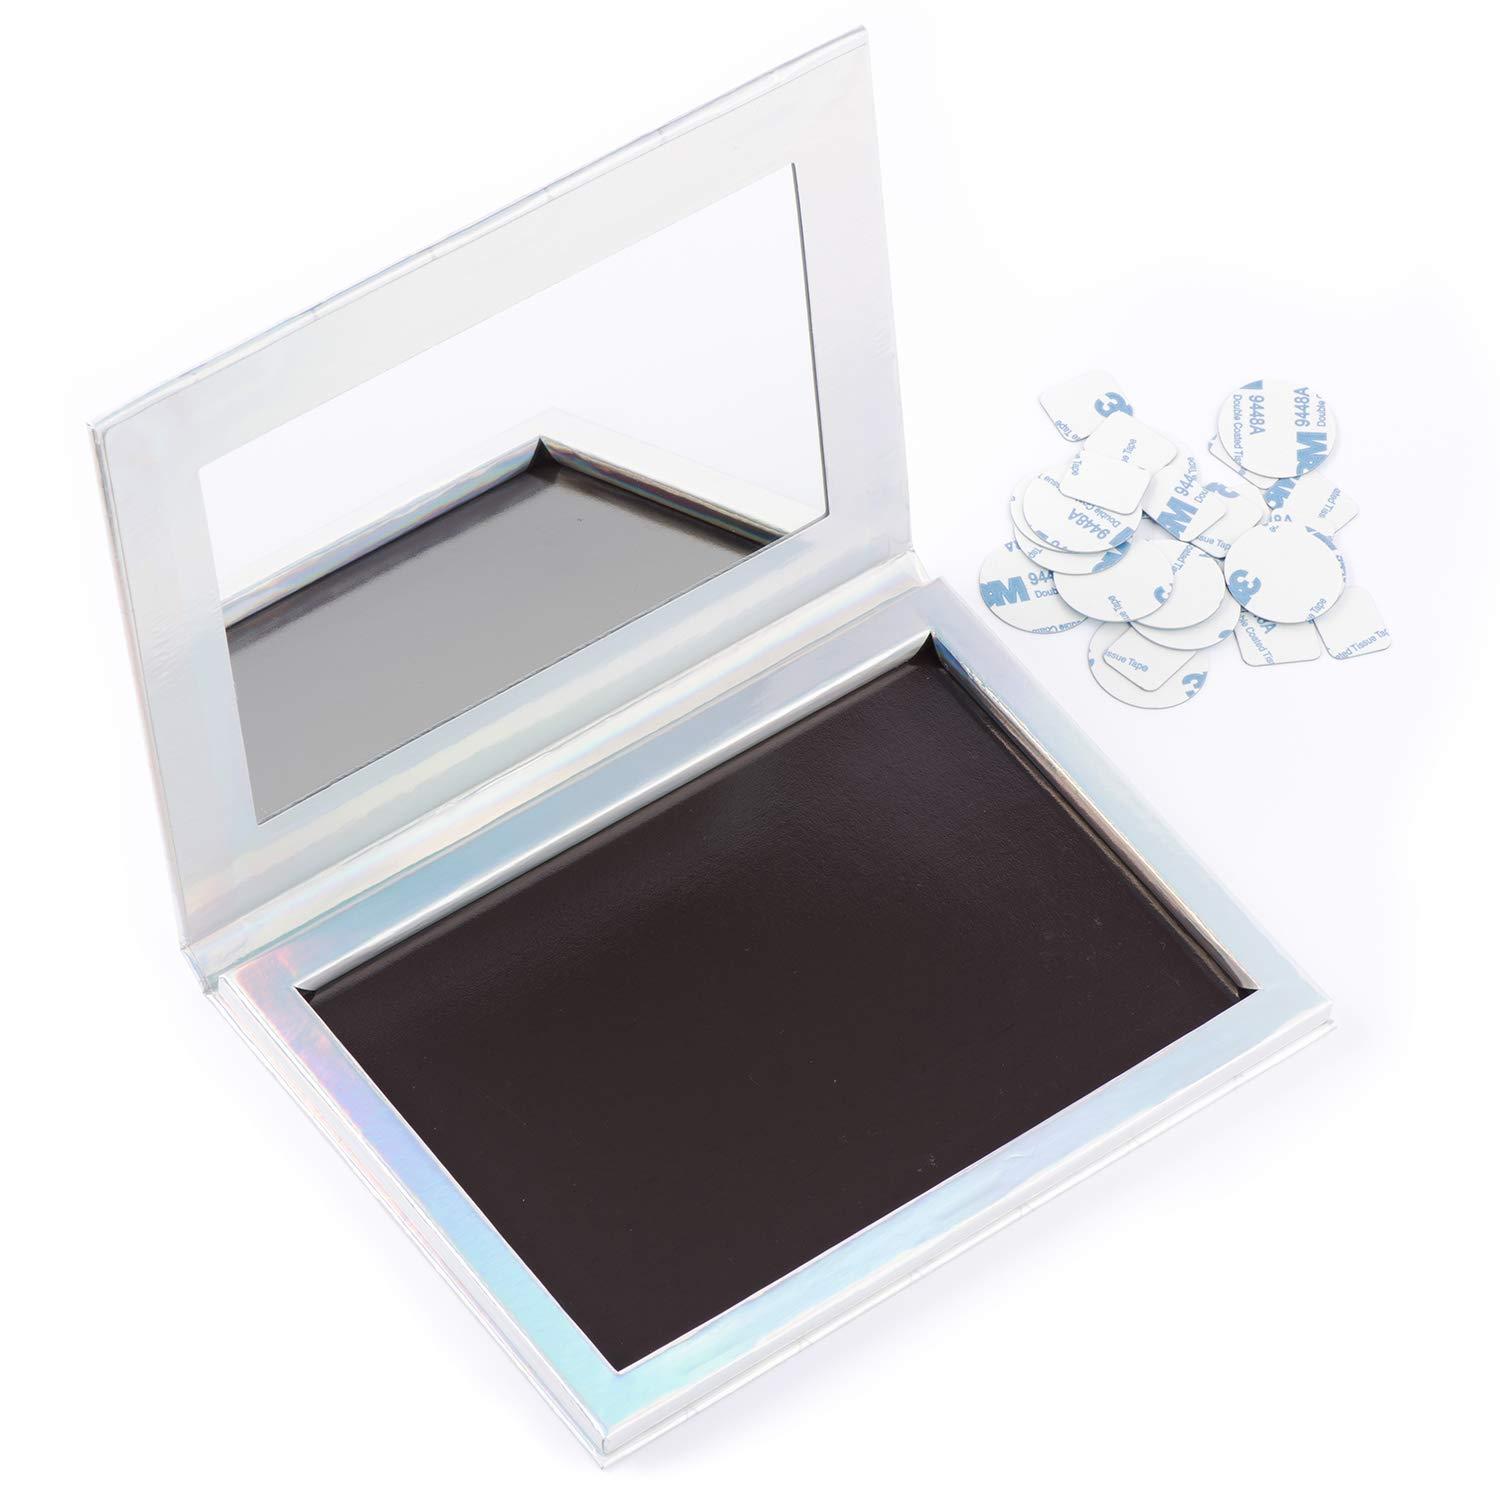 Allwon Magnetic Palette Empty Makeup Palette with Mirror for Eyeshadow  Lipstick Blush Powder (Black)